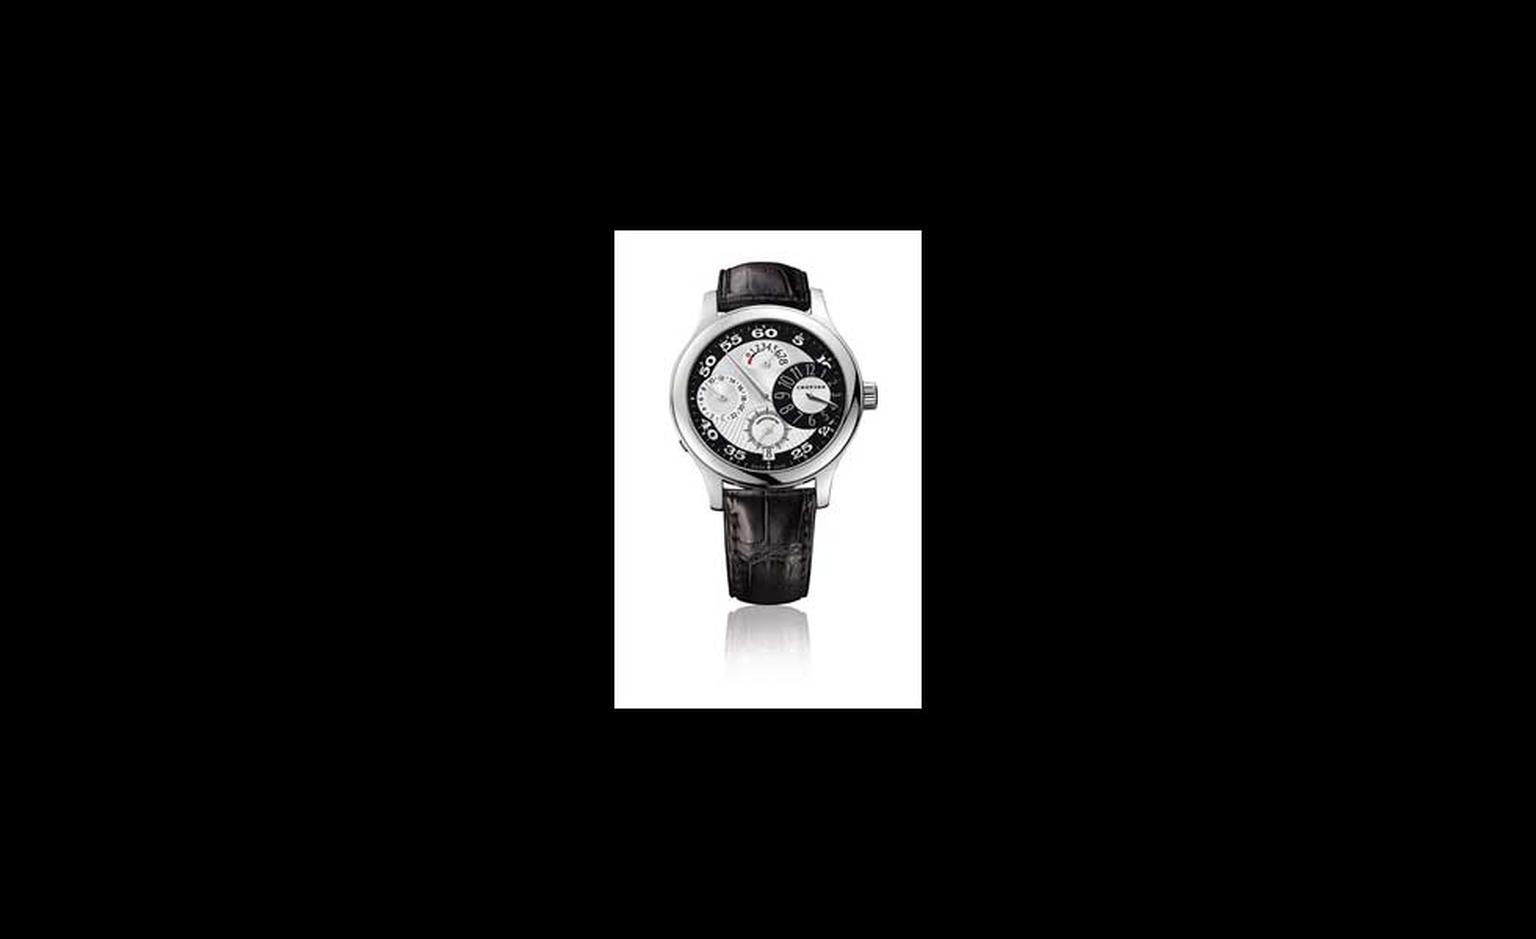 Chopard L.U.C. Regulateur white gold watch worn by Javier Bardem at the Oscars 2011